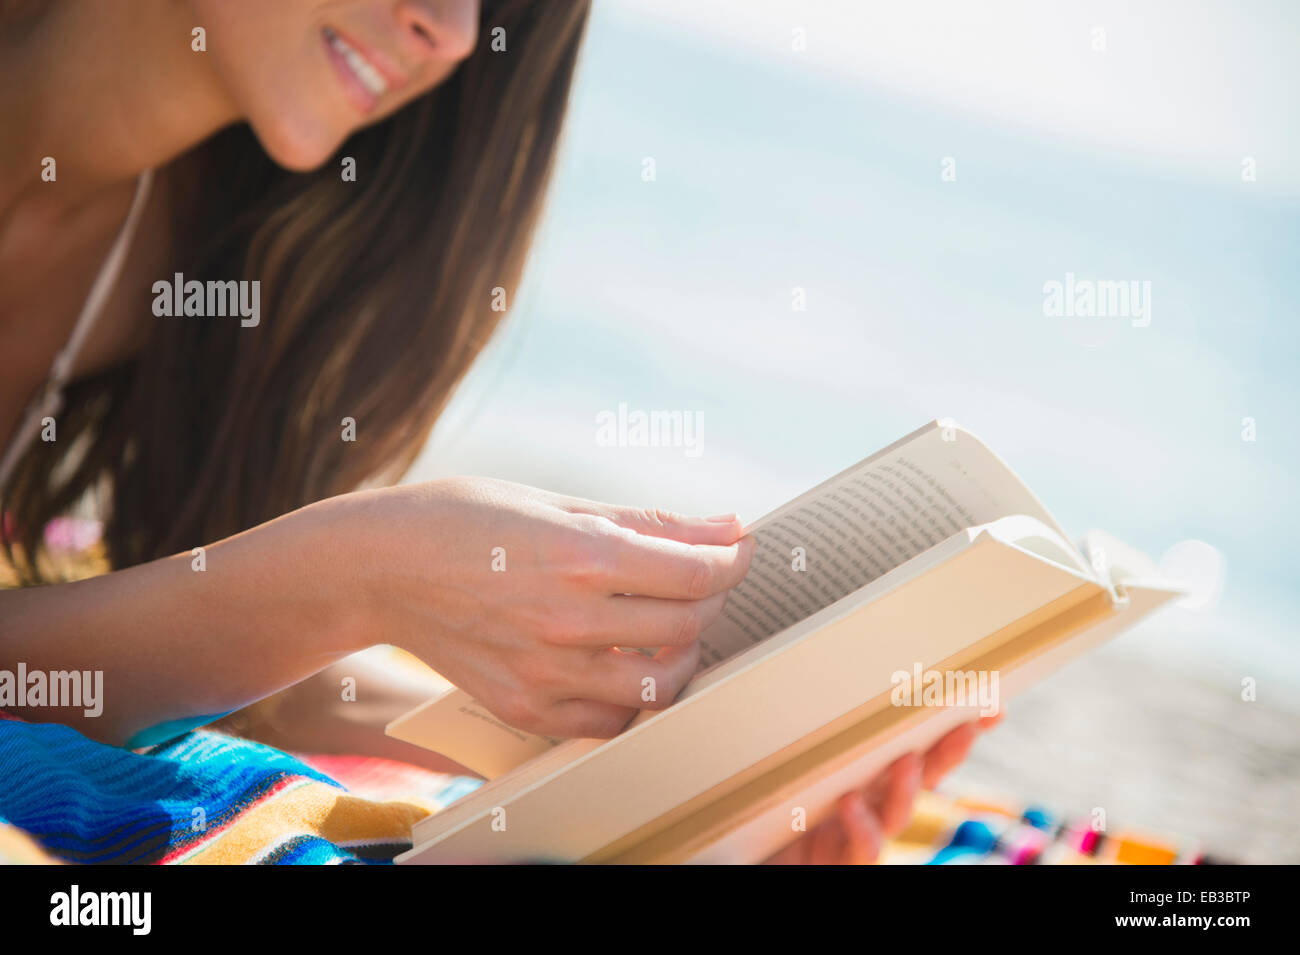 Caucasian woman reading book on beach Stock Photo